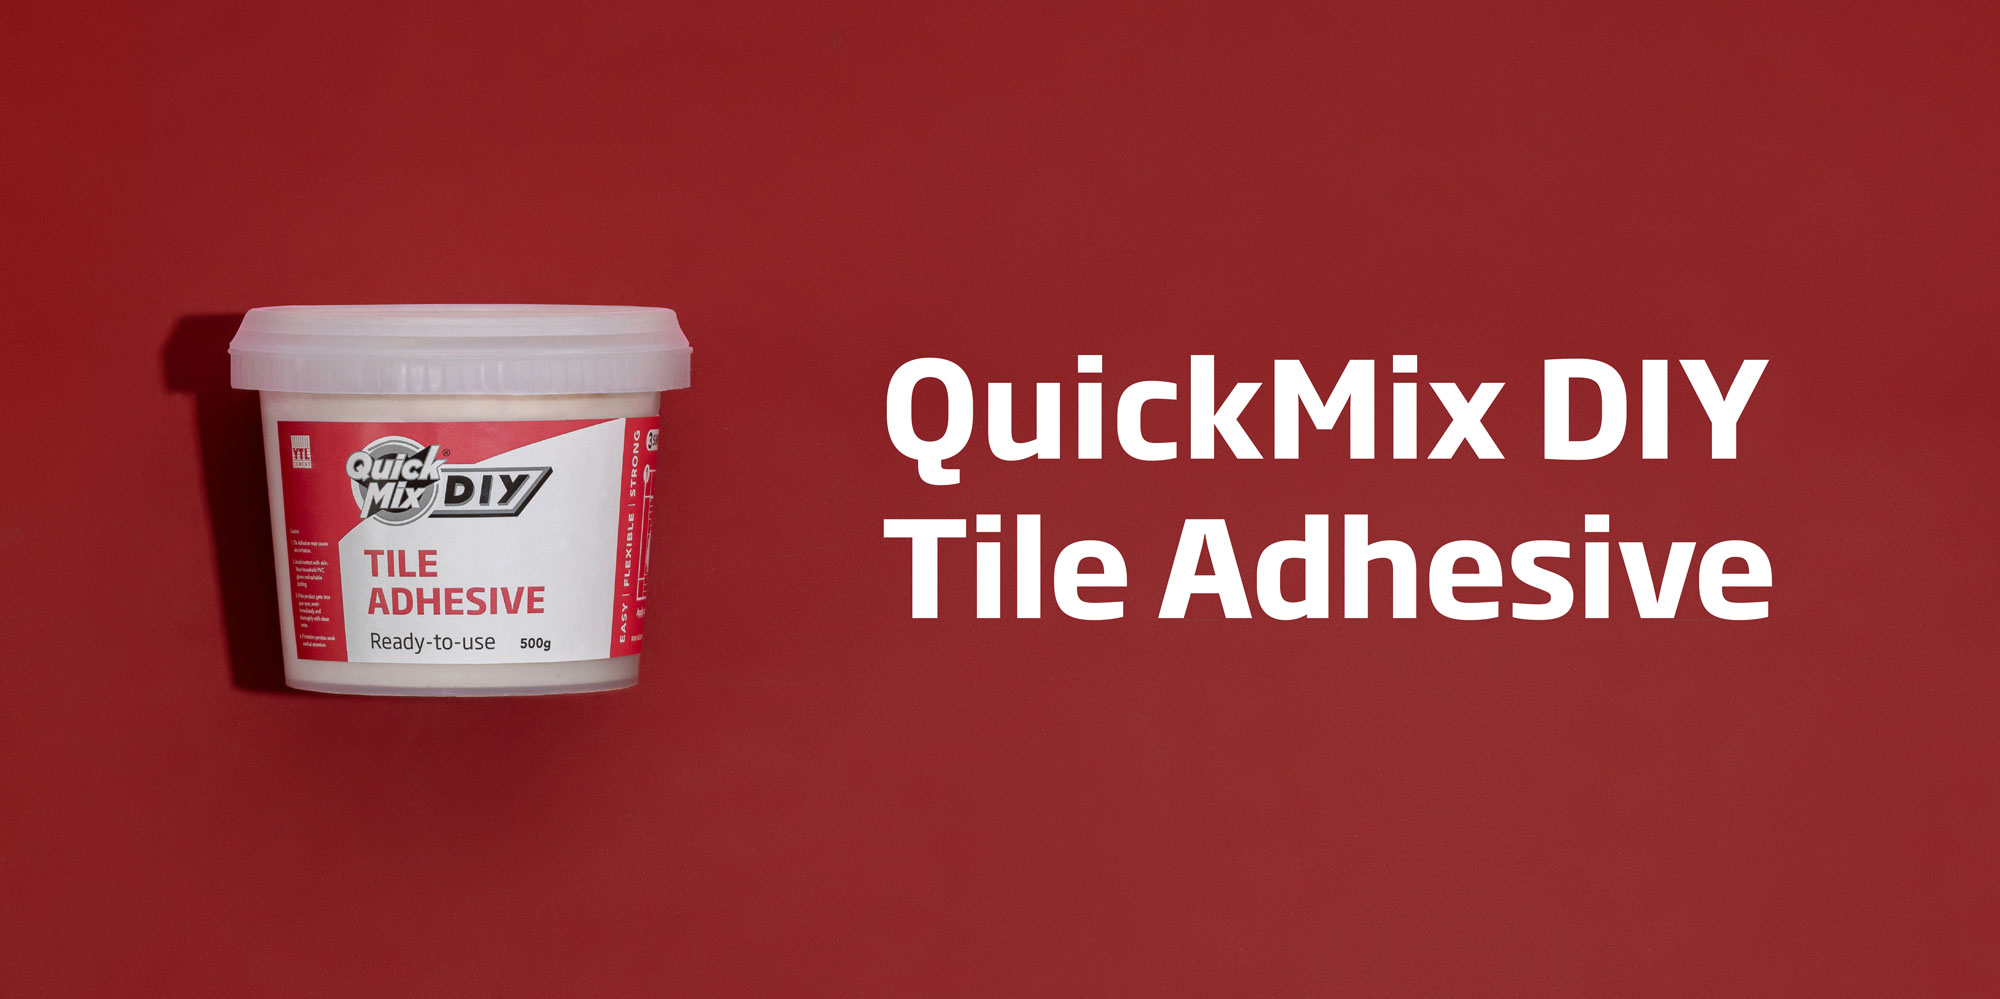 QuickMix-DIY-Tile-Adhesive-banner